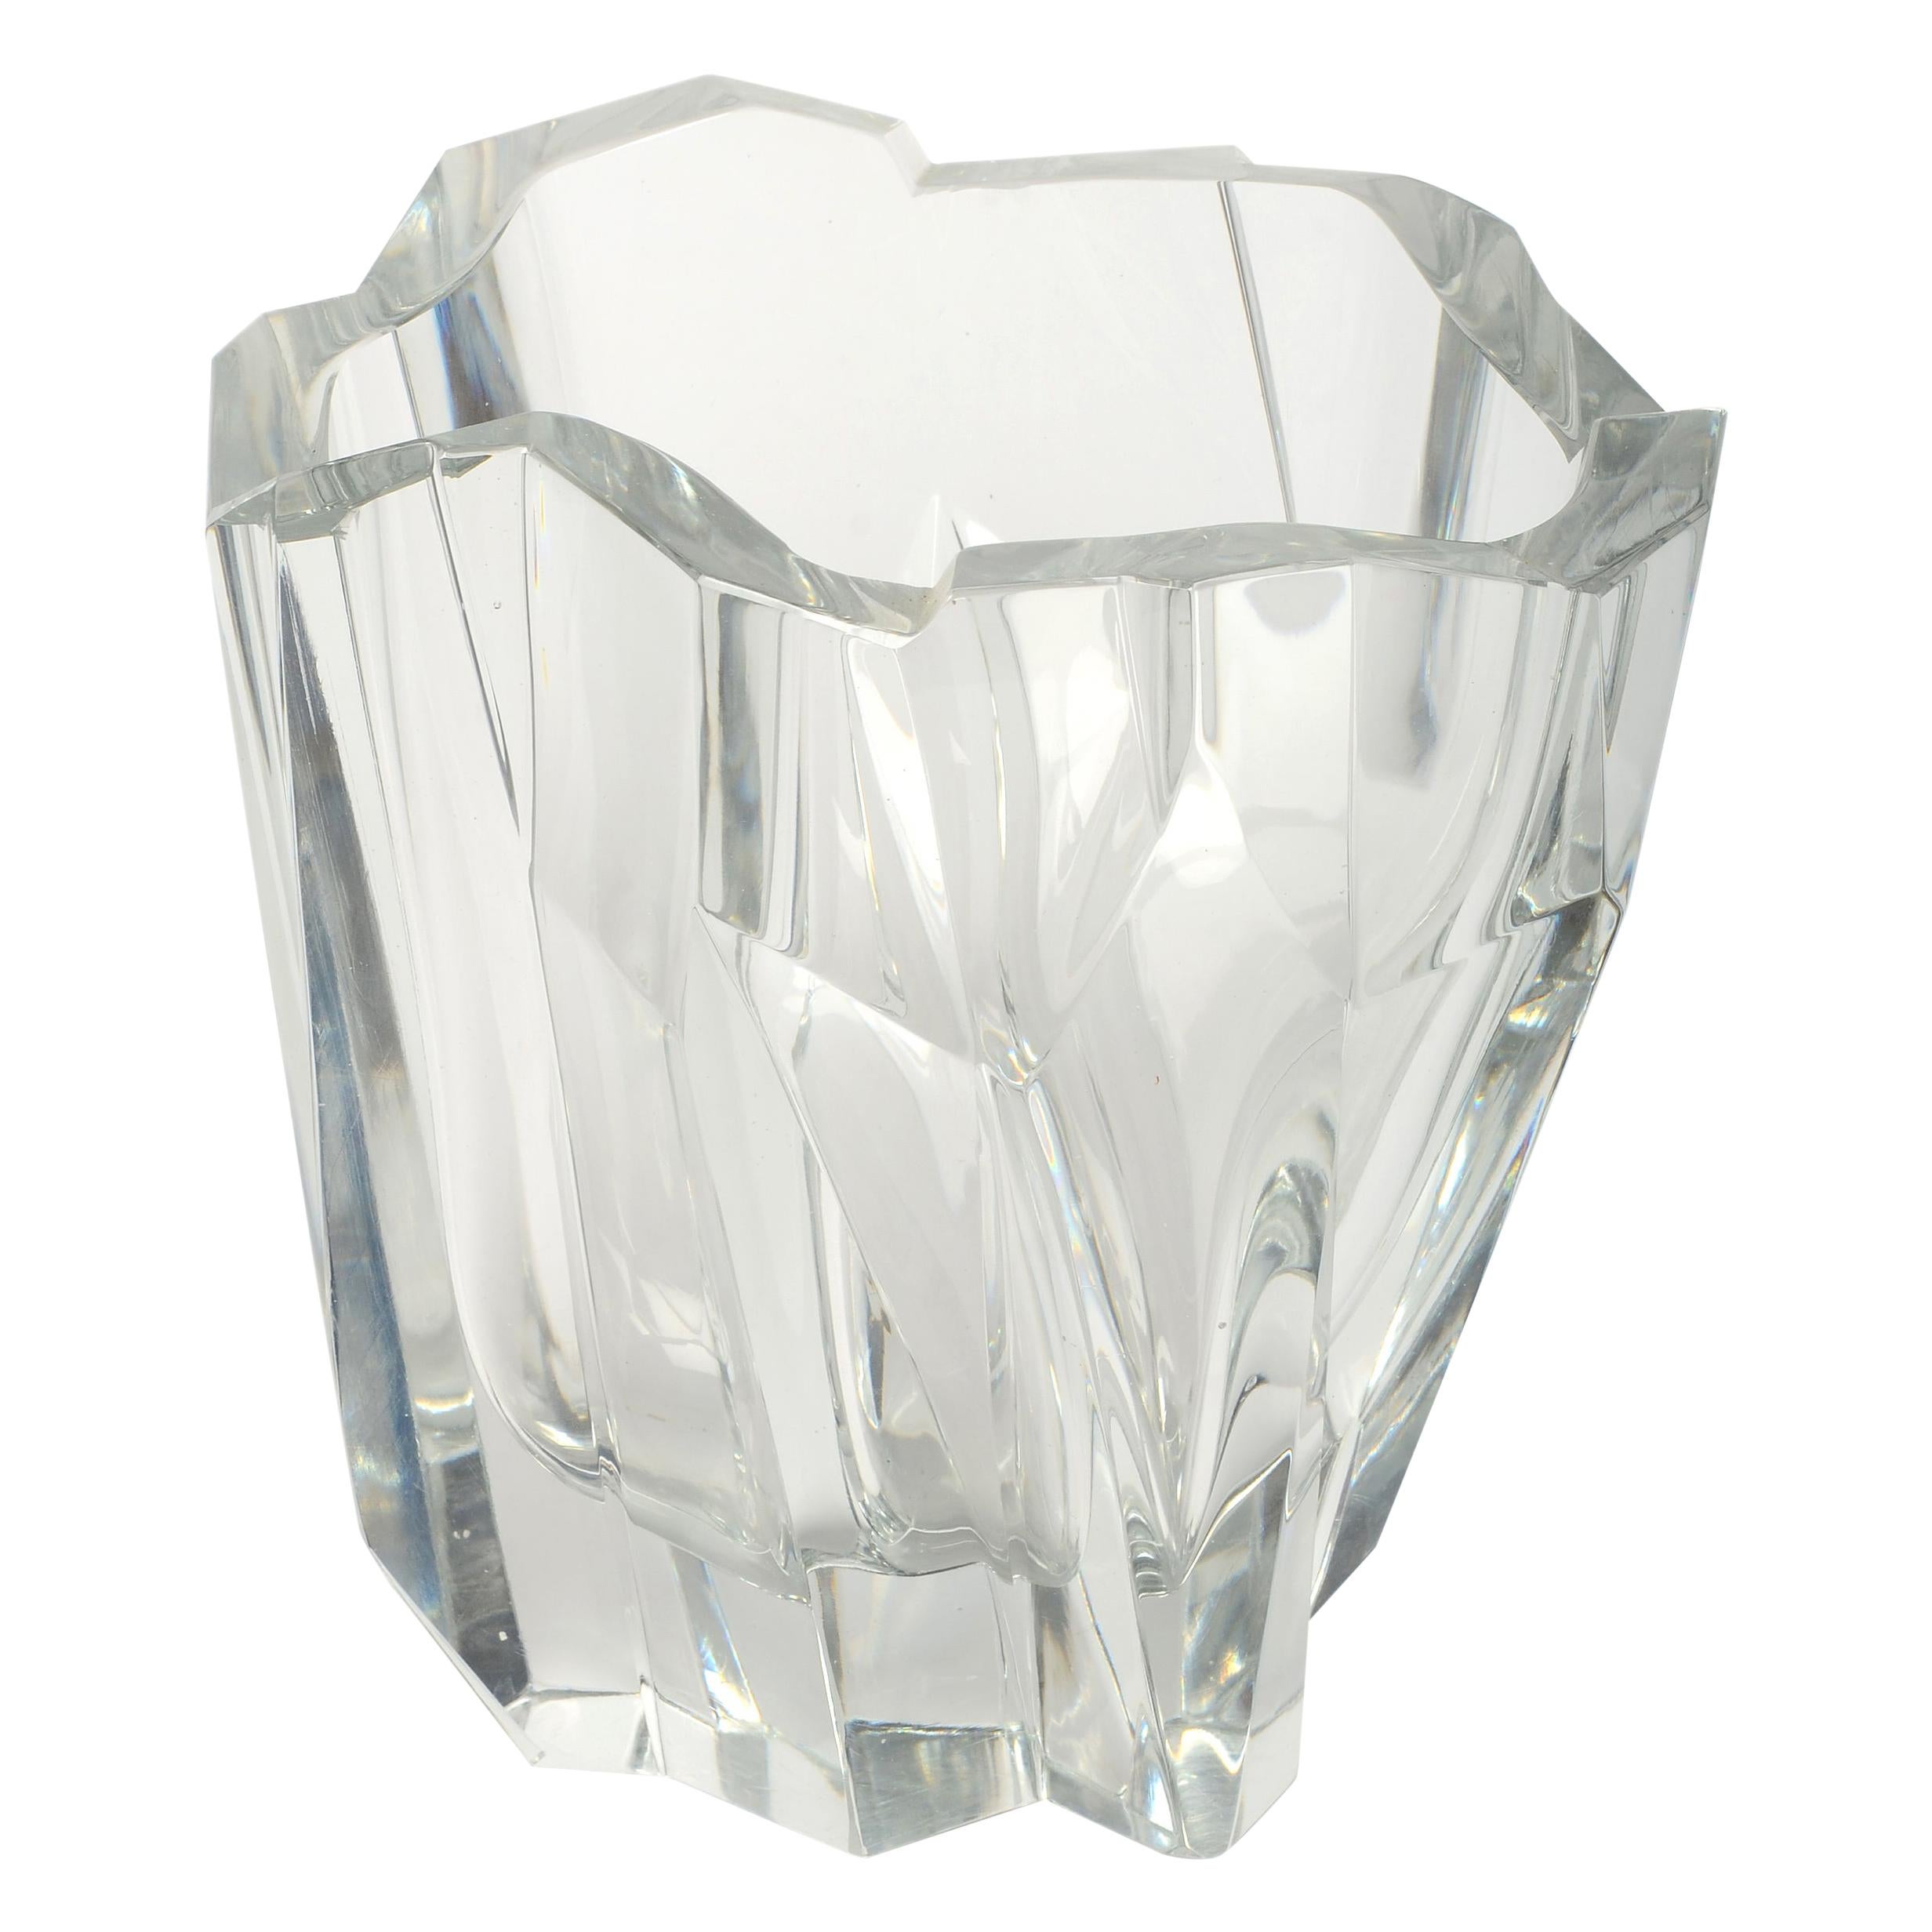 Tapio Wirkkala "Iceberg" Vase 3825 For Sale